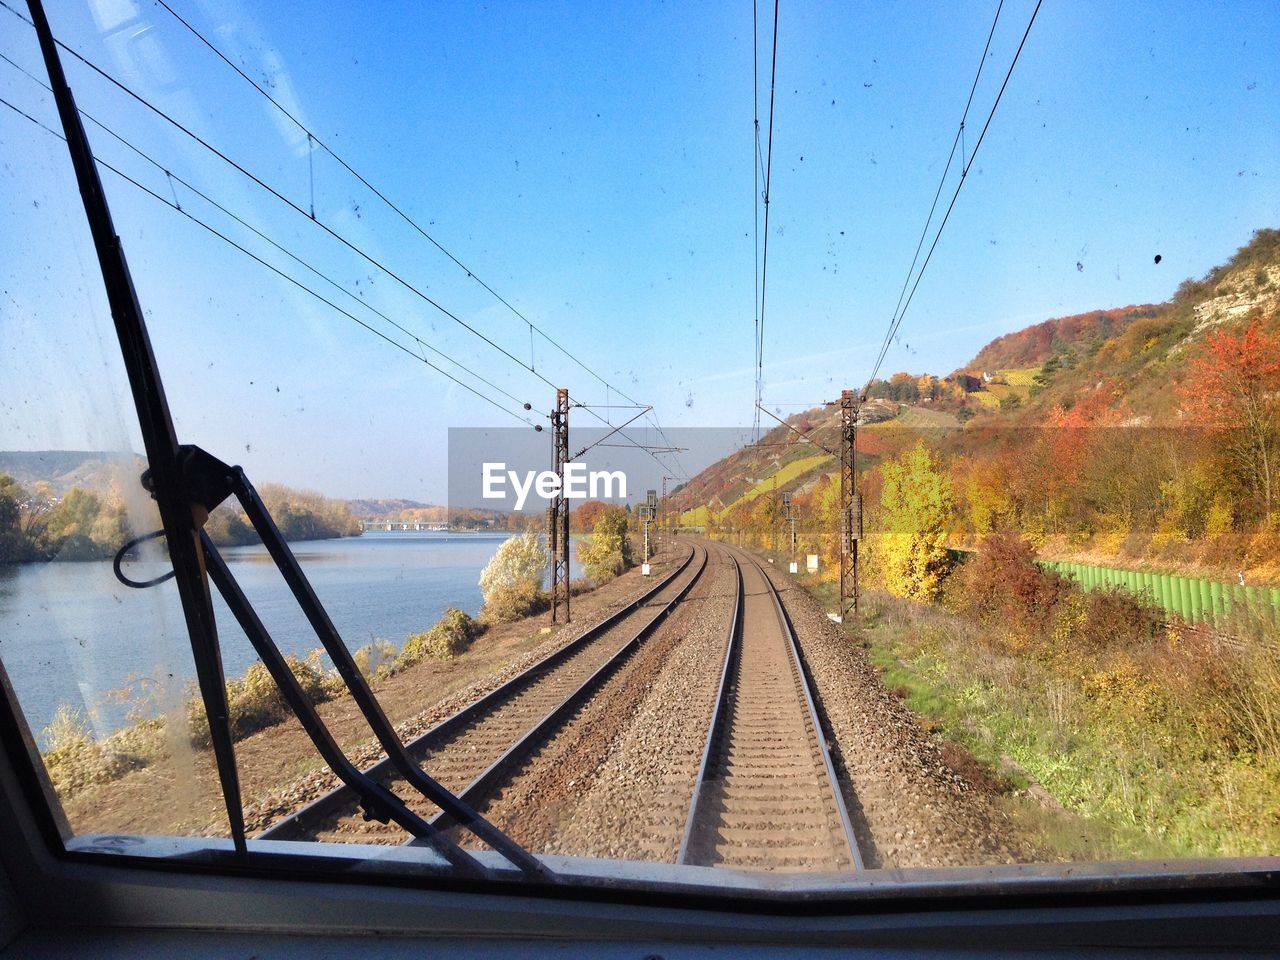 View of railway tracks seen through train windshield